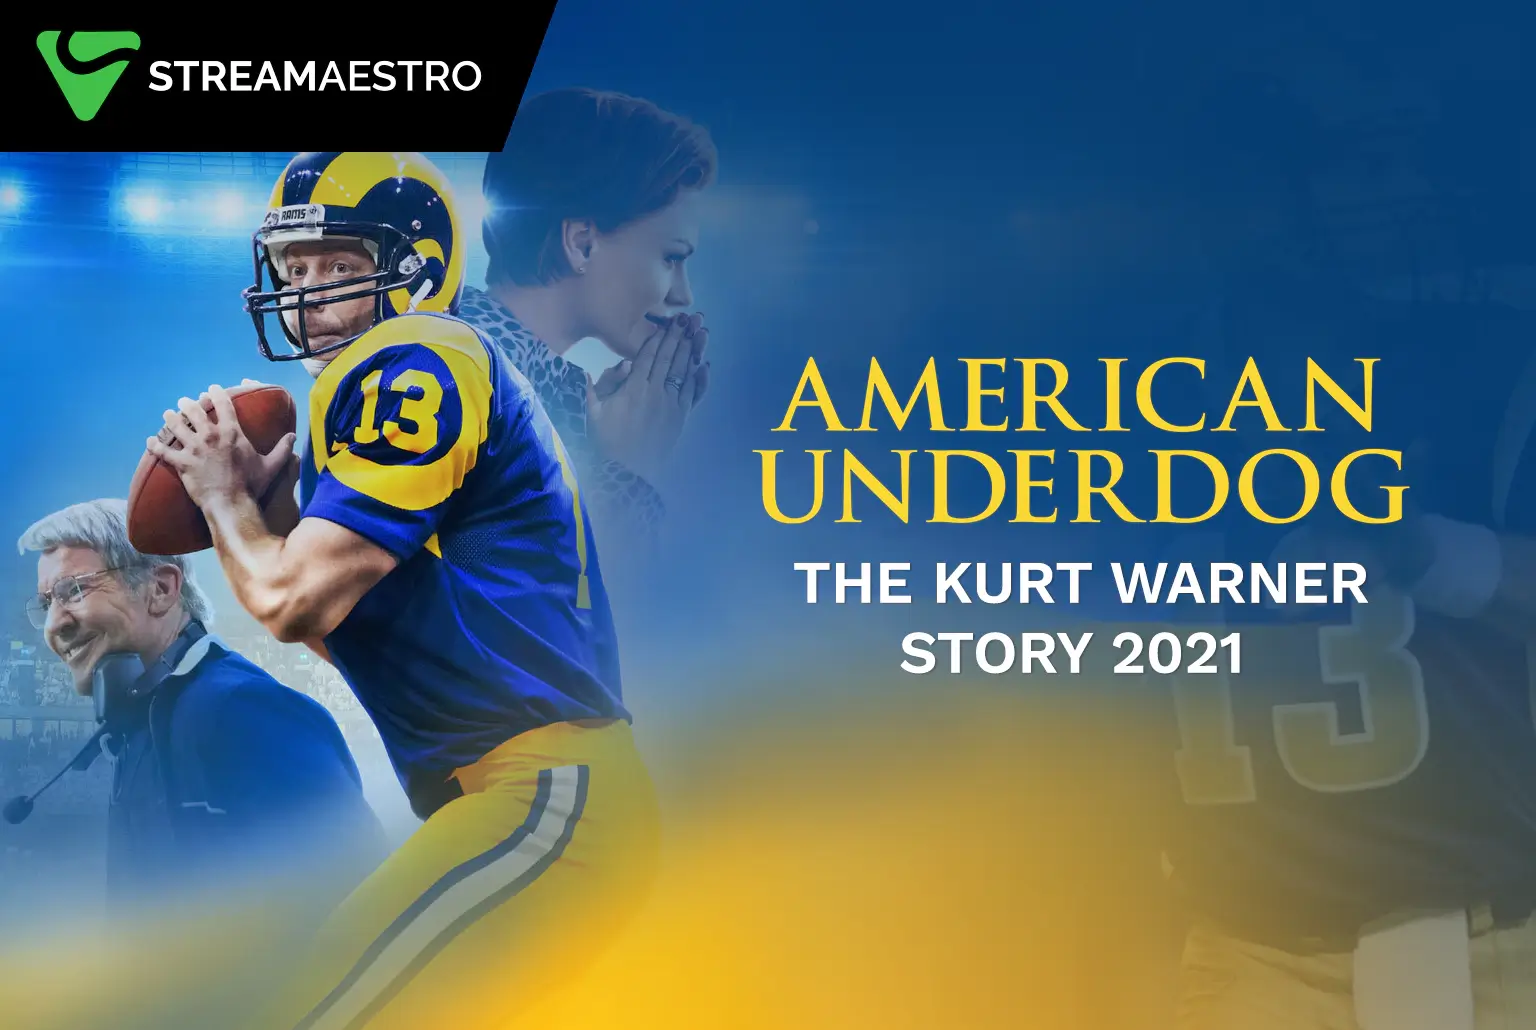 How to Watch American Underdog: The Kurt Warner Story 2021